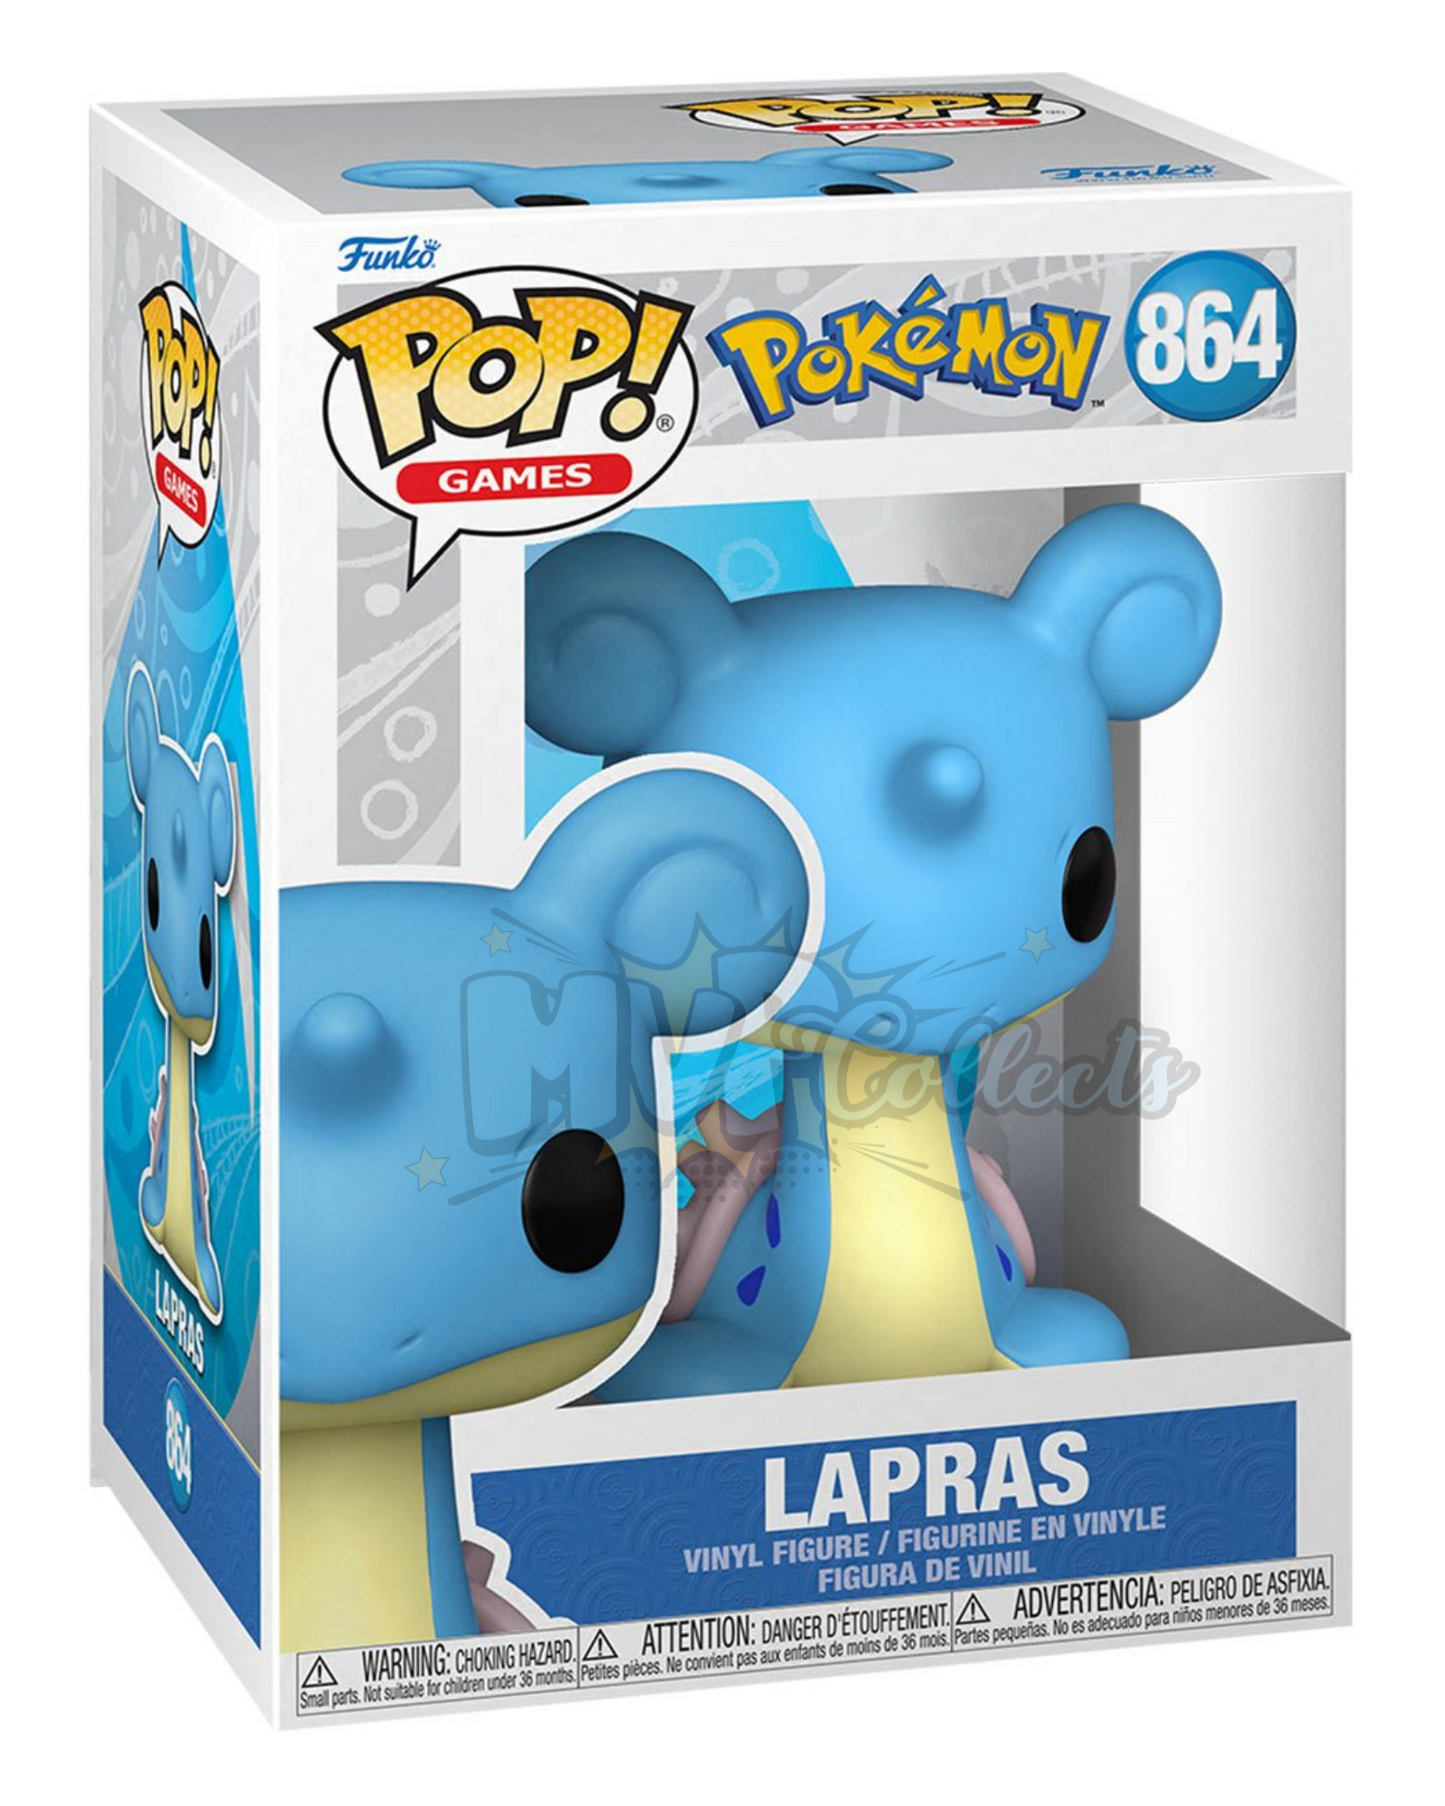 Lapras POP! (Pokemon) - 864